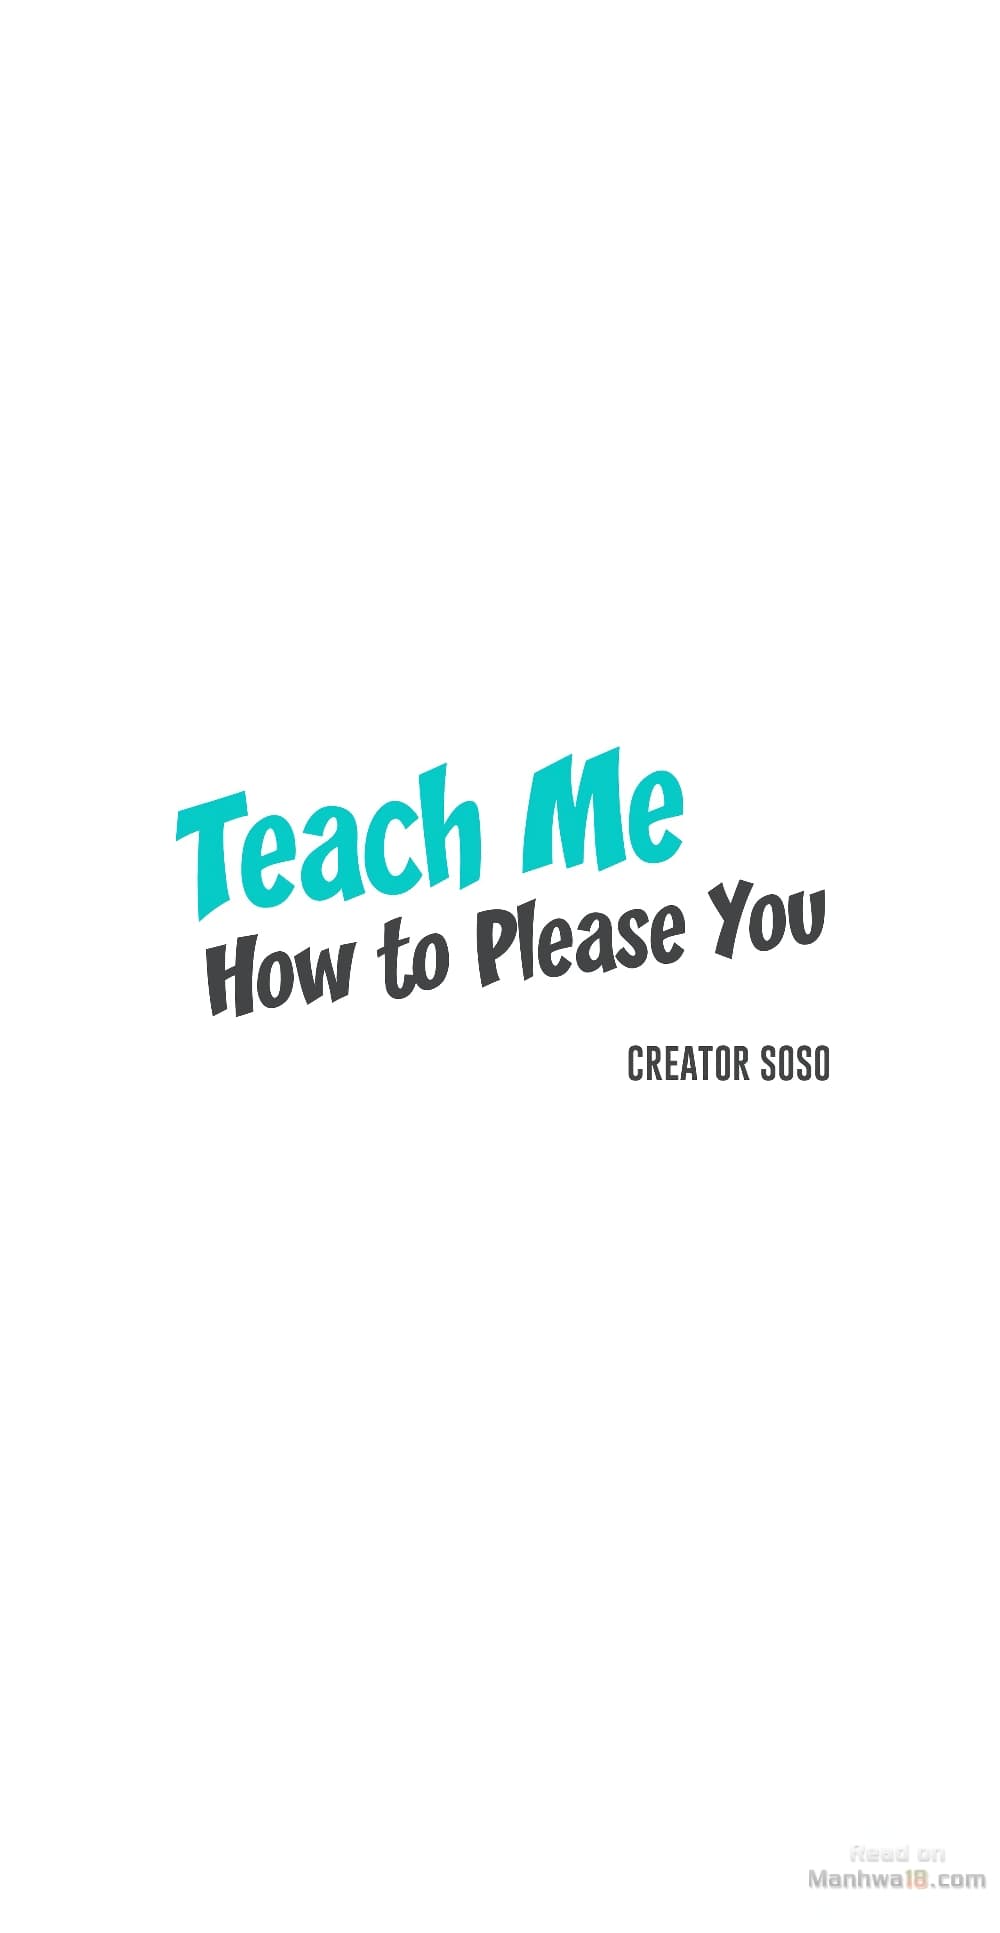 Teach Me How to Please You 17 (6)